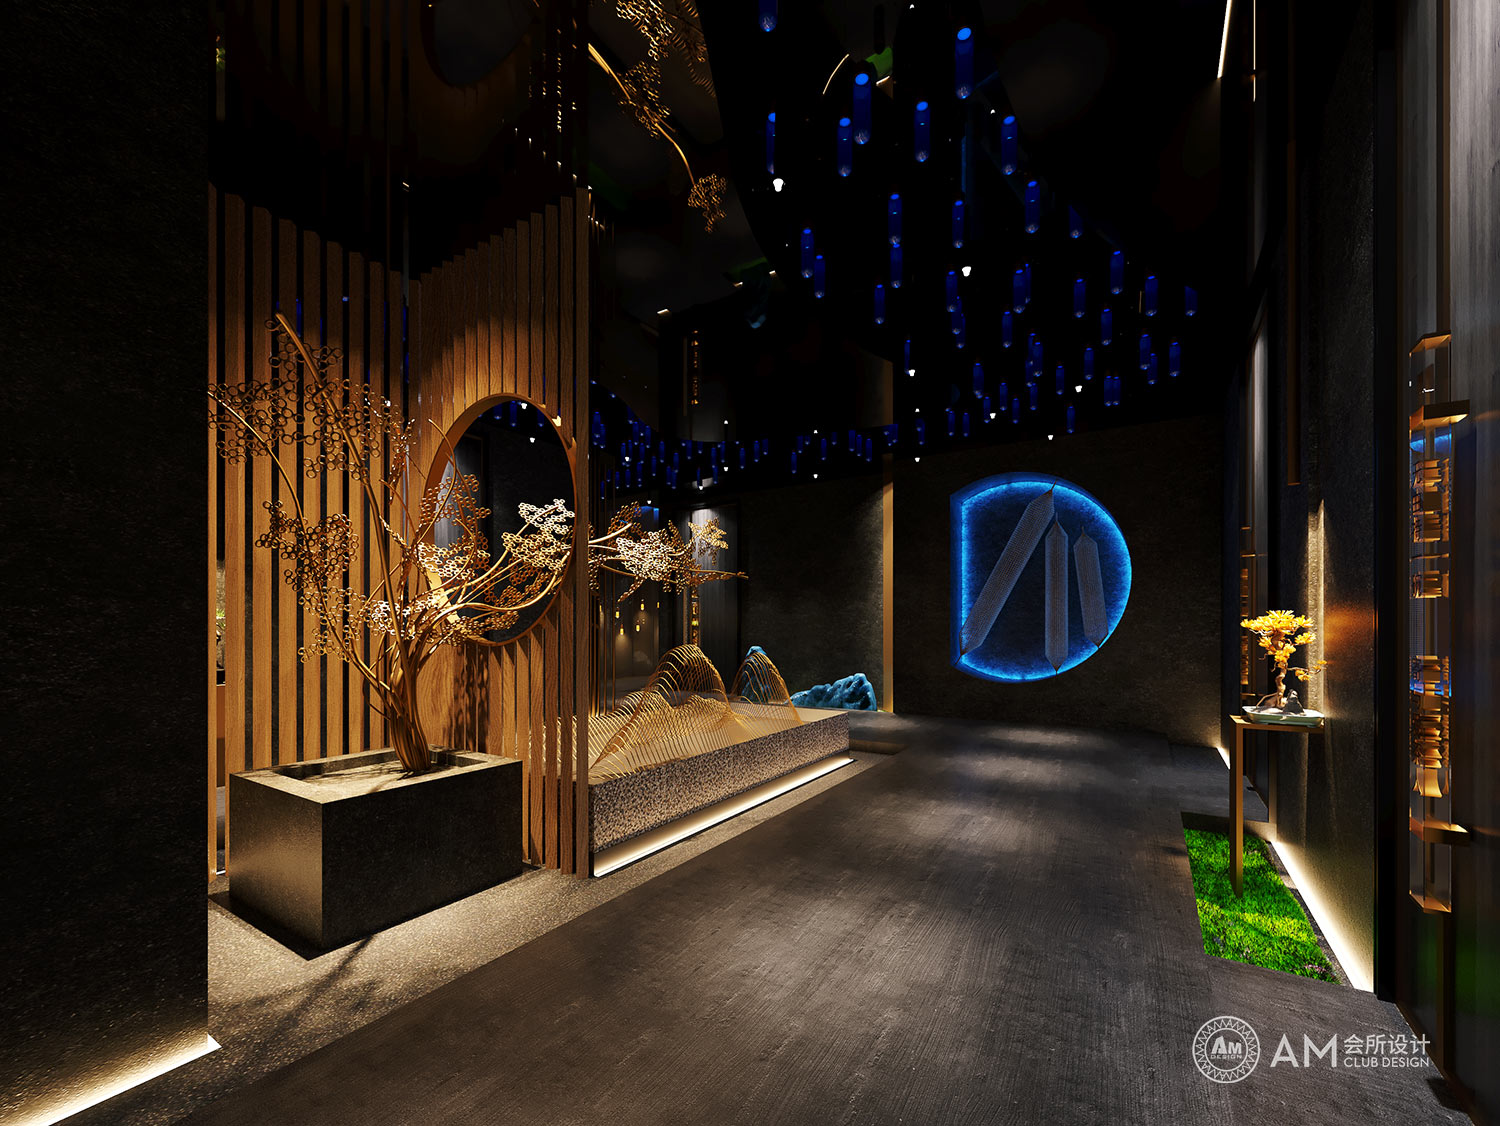 AM DESIGN | Corridor design of spa club in hanyue Palace